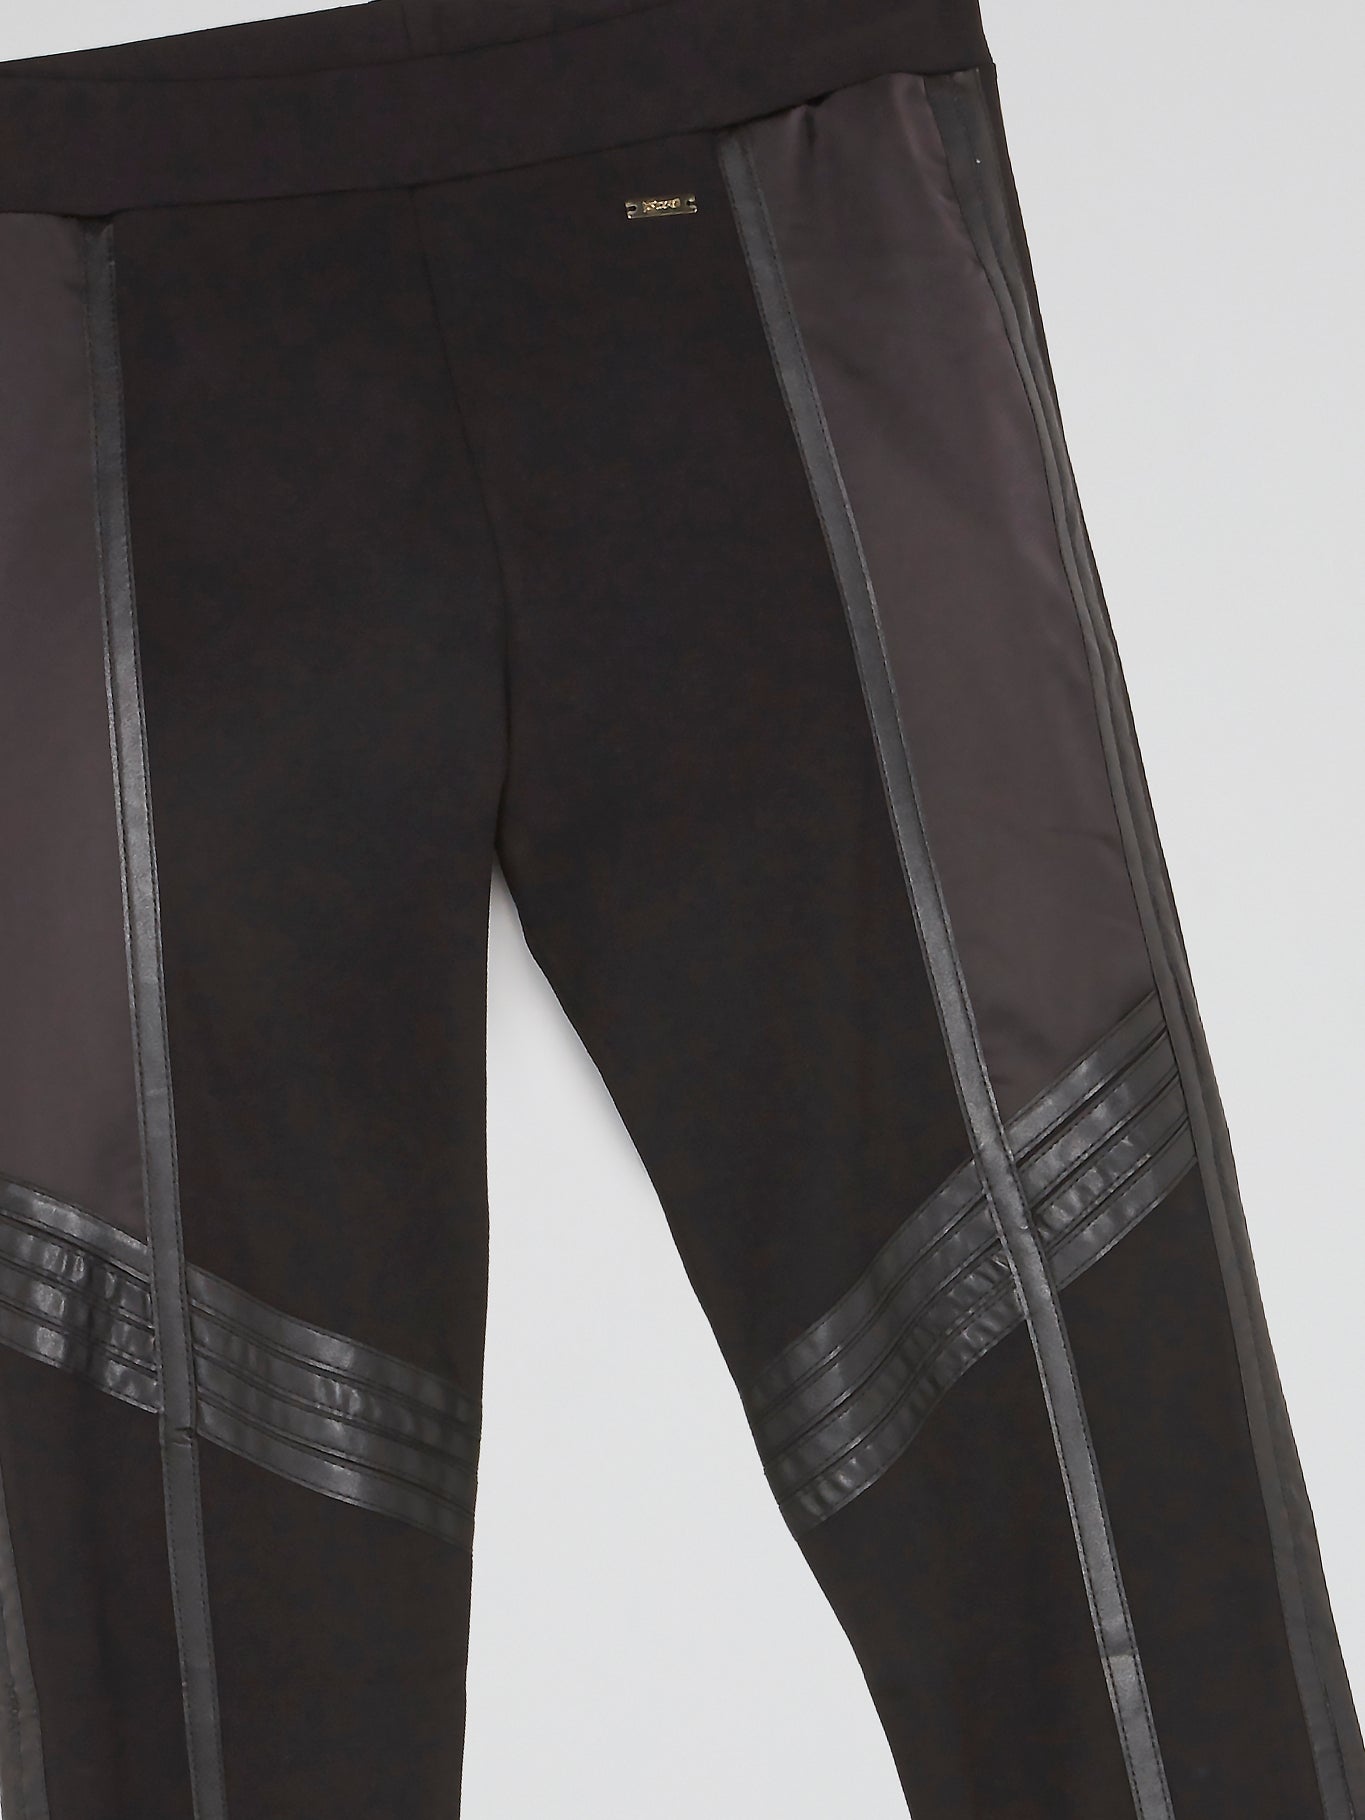 Black Leather Panel Leggings